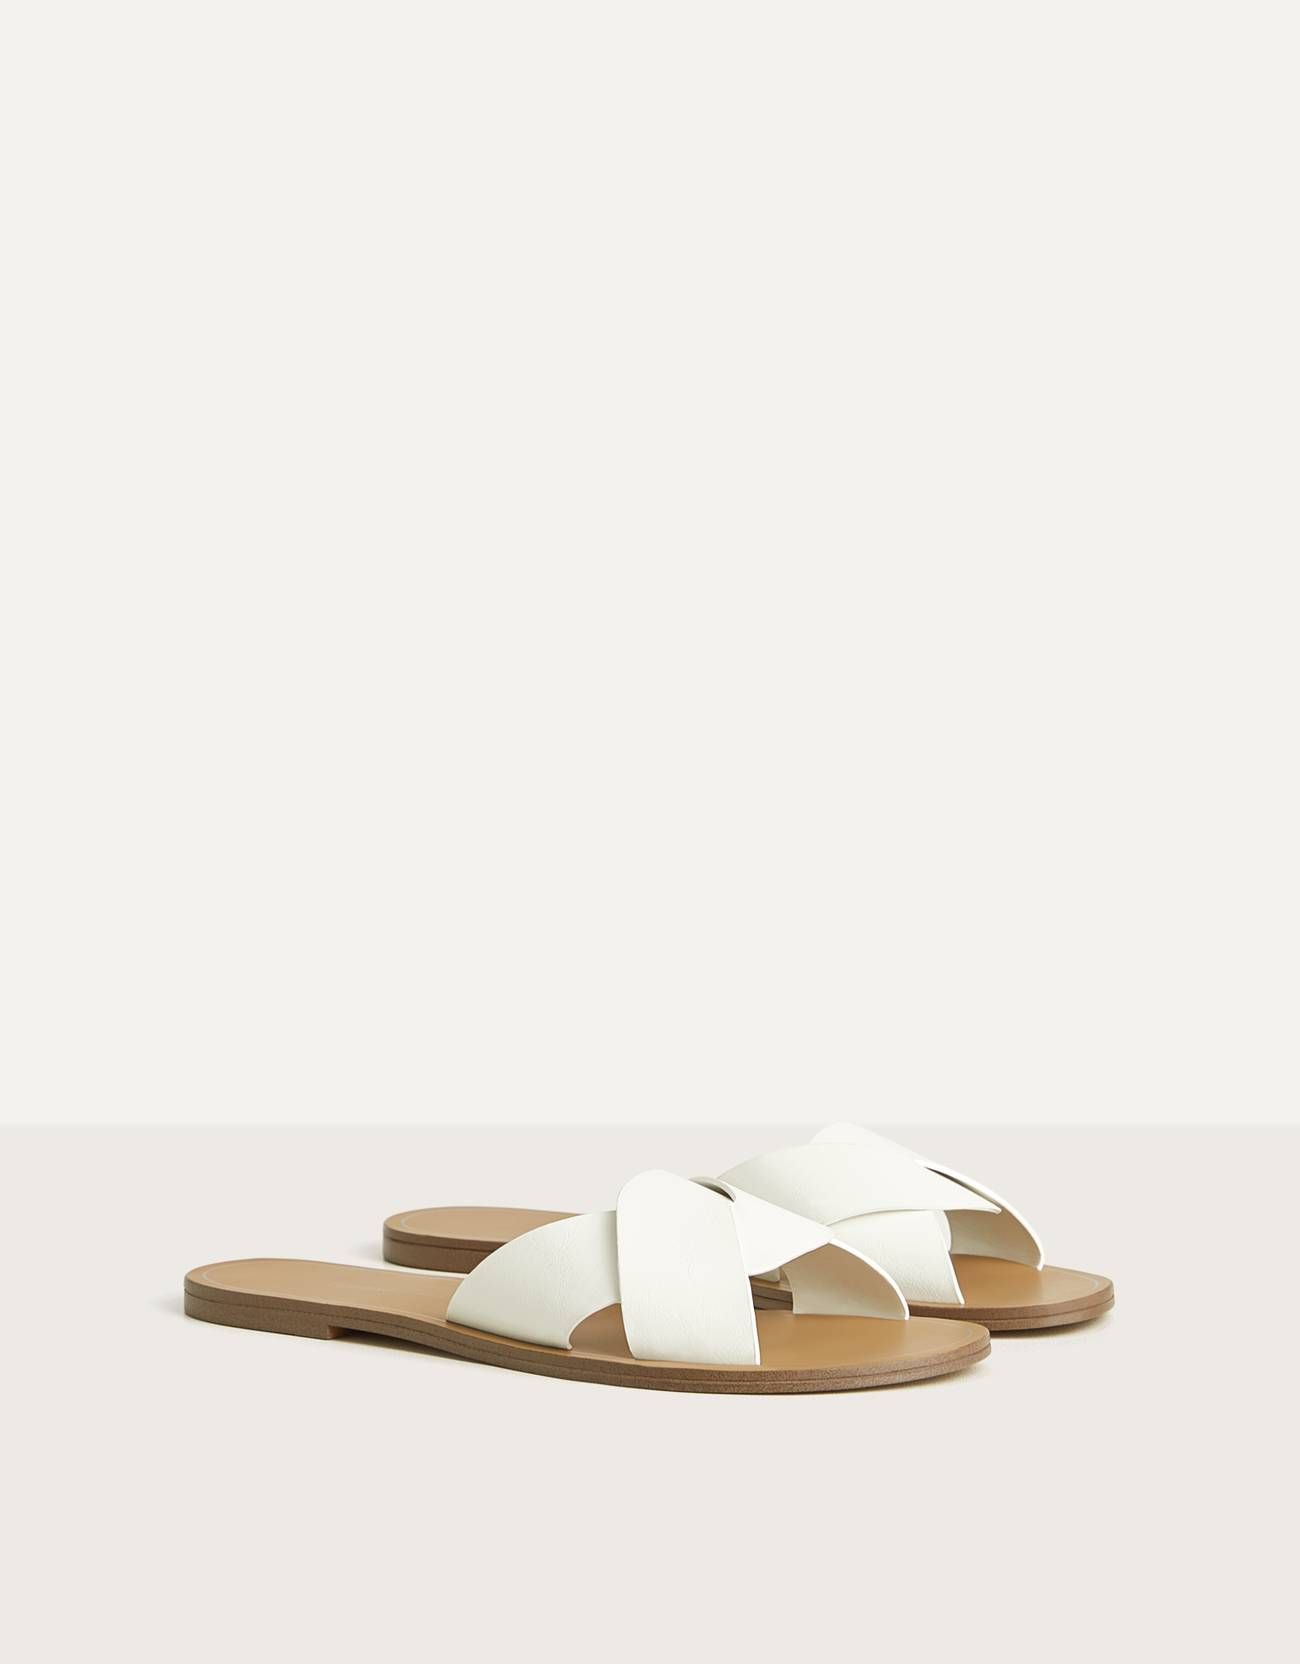 Sandalas planas en color blanco de Bershka